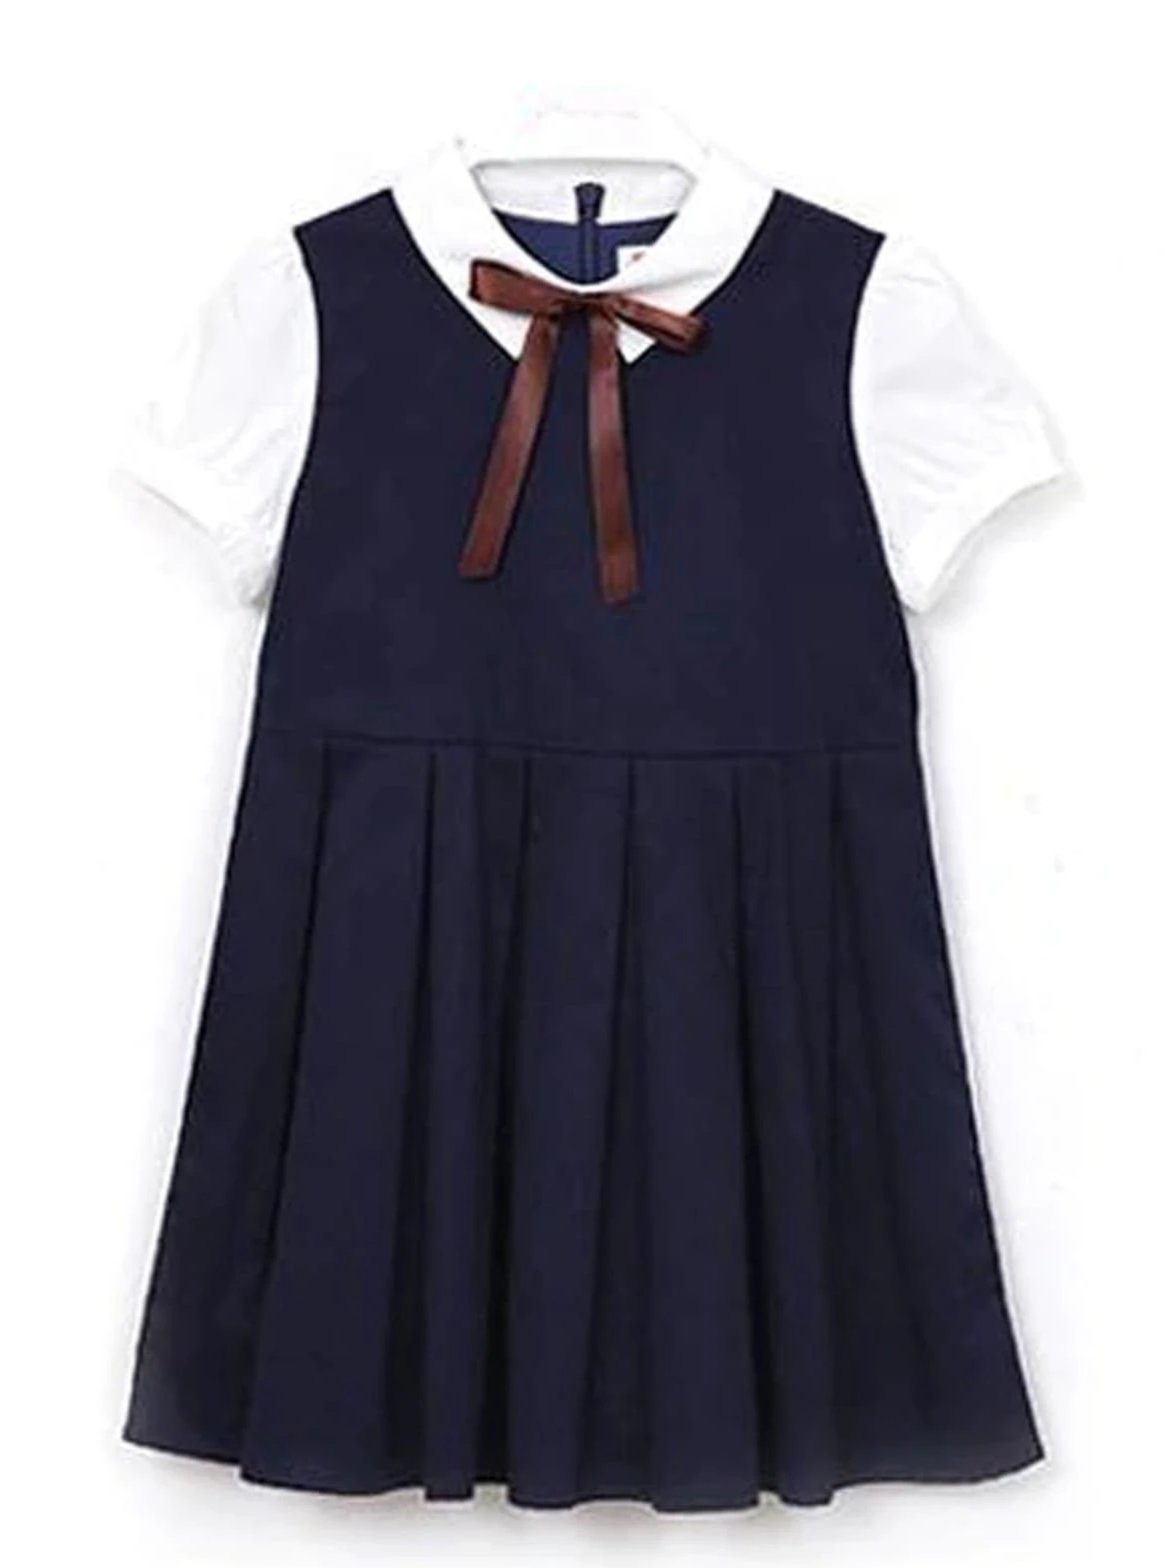 Girls Preppy Bow Tie Collar Pleated A-Line School Girl Uniform Dress - Blue / 3T - Girls Fall Casual Dress